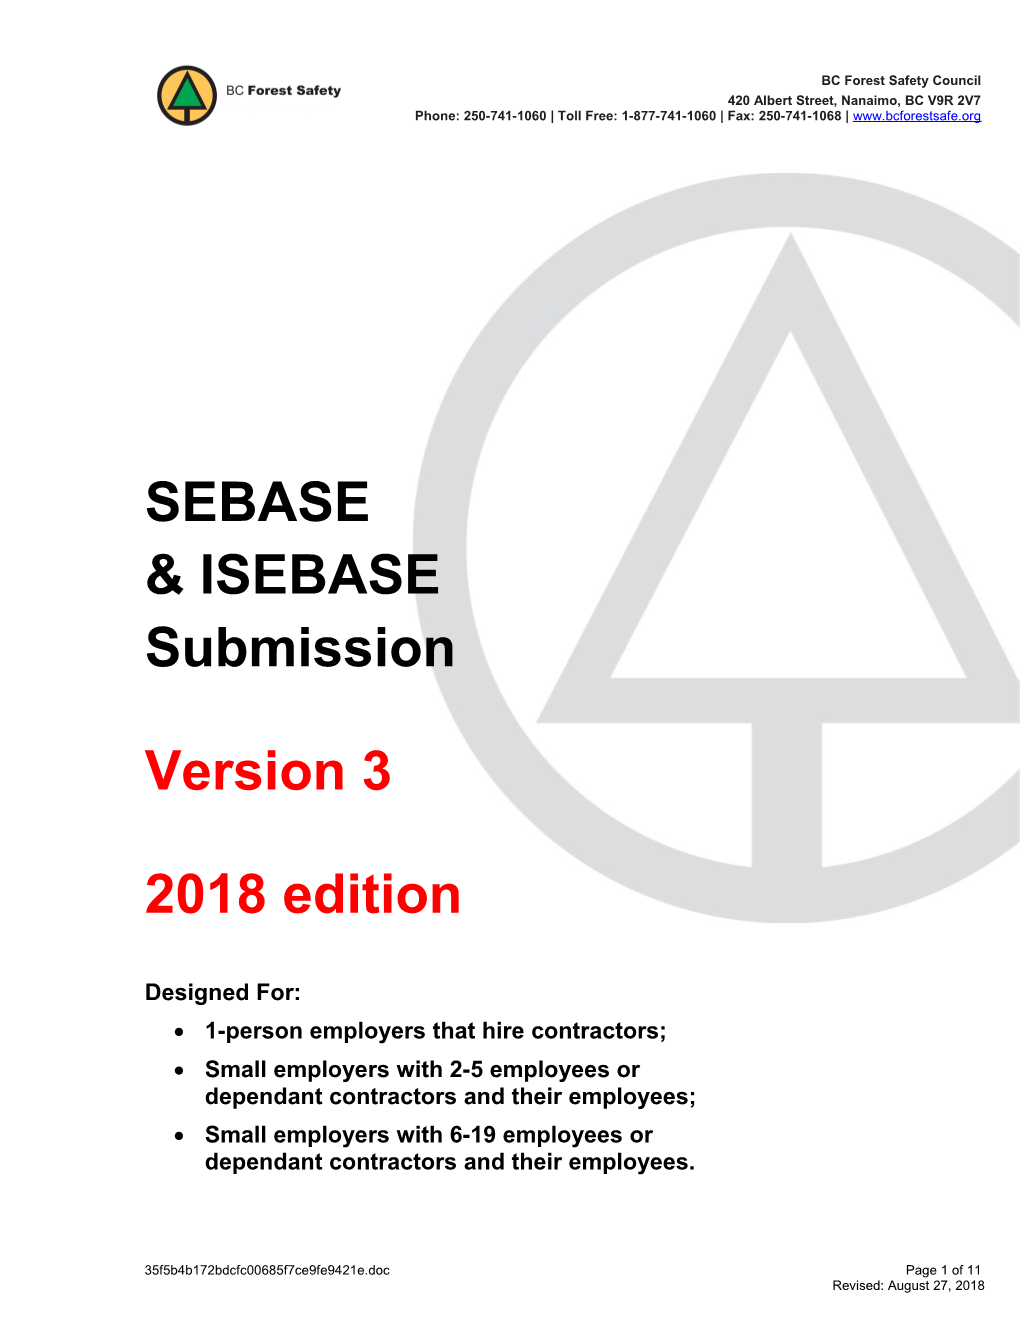 SEBASE & ISEBASE Submission Version 3